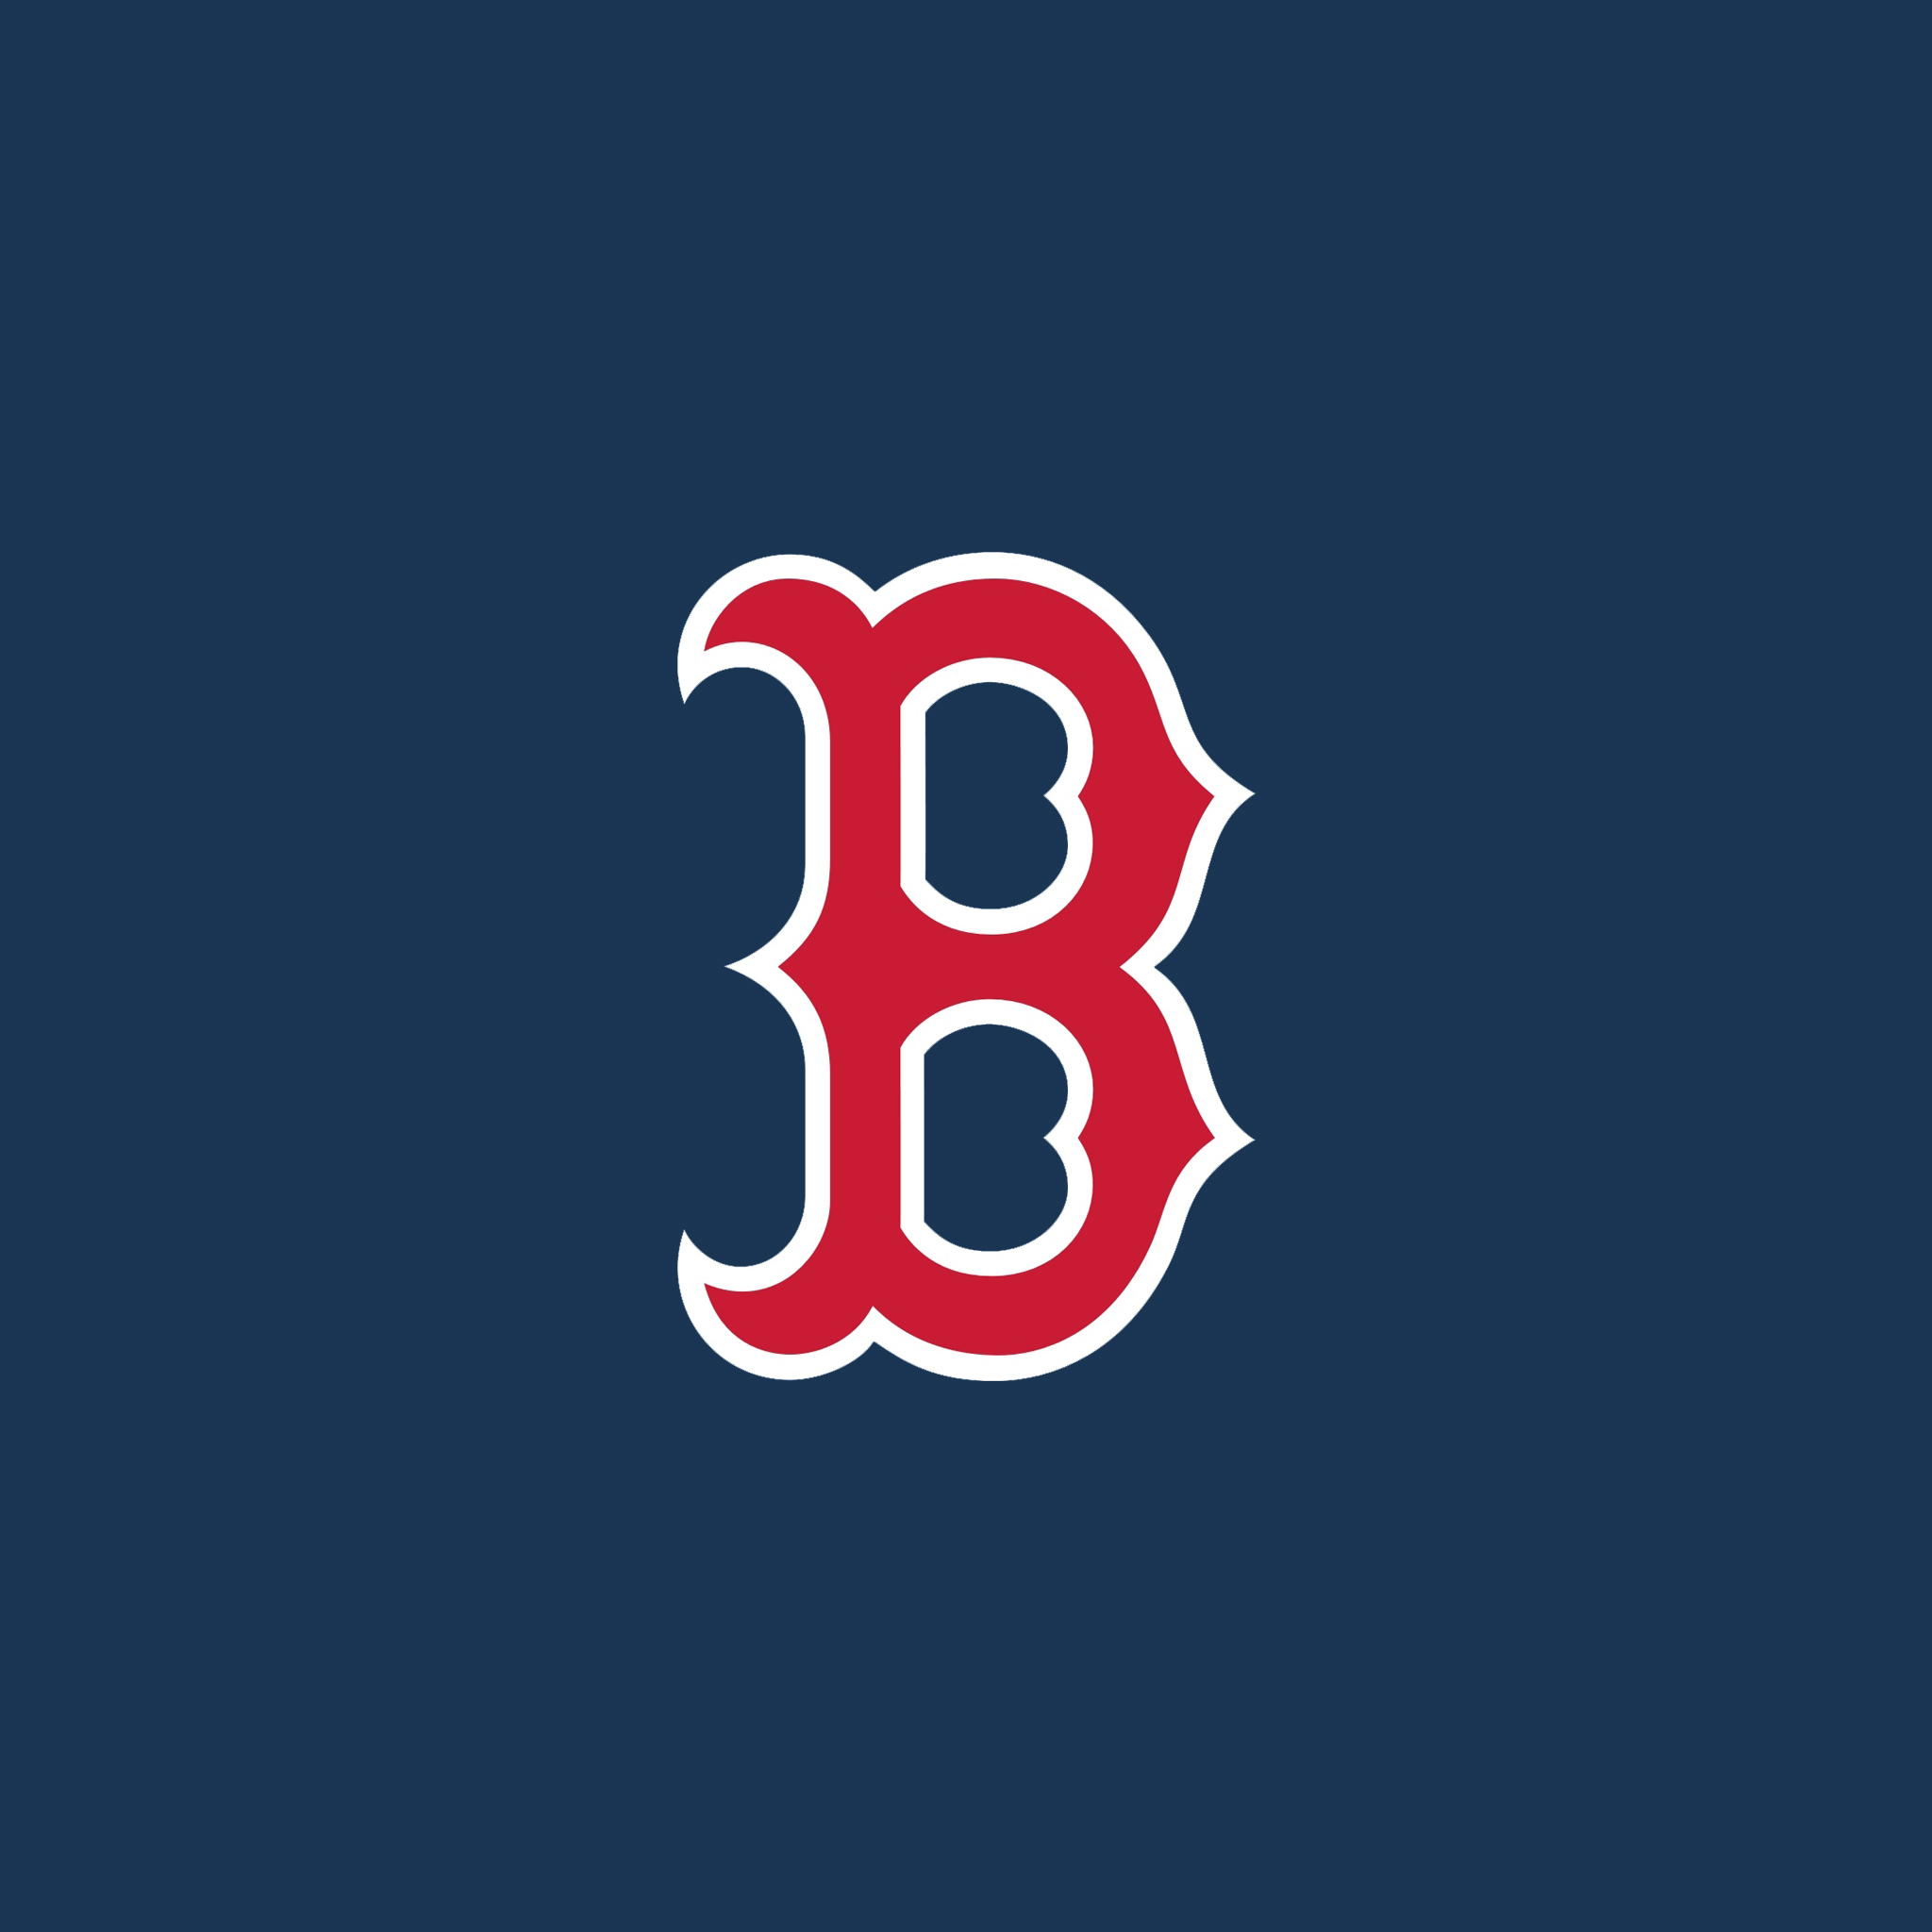 Boston Red Sox Desktop Wallpaper